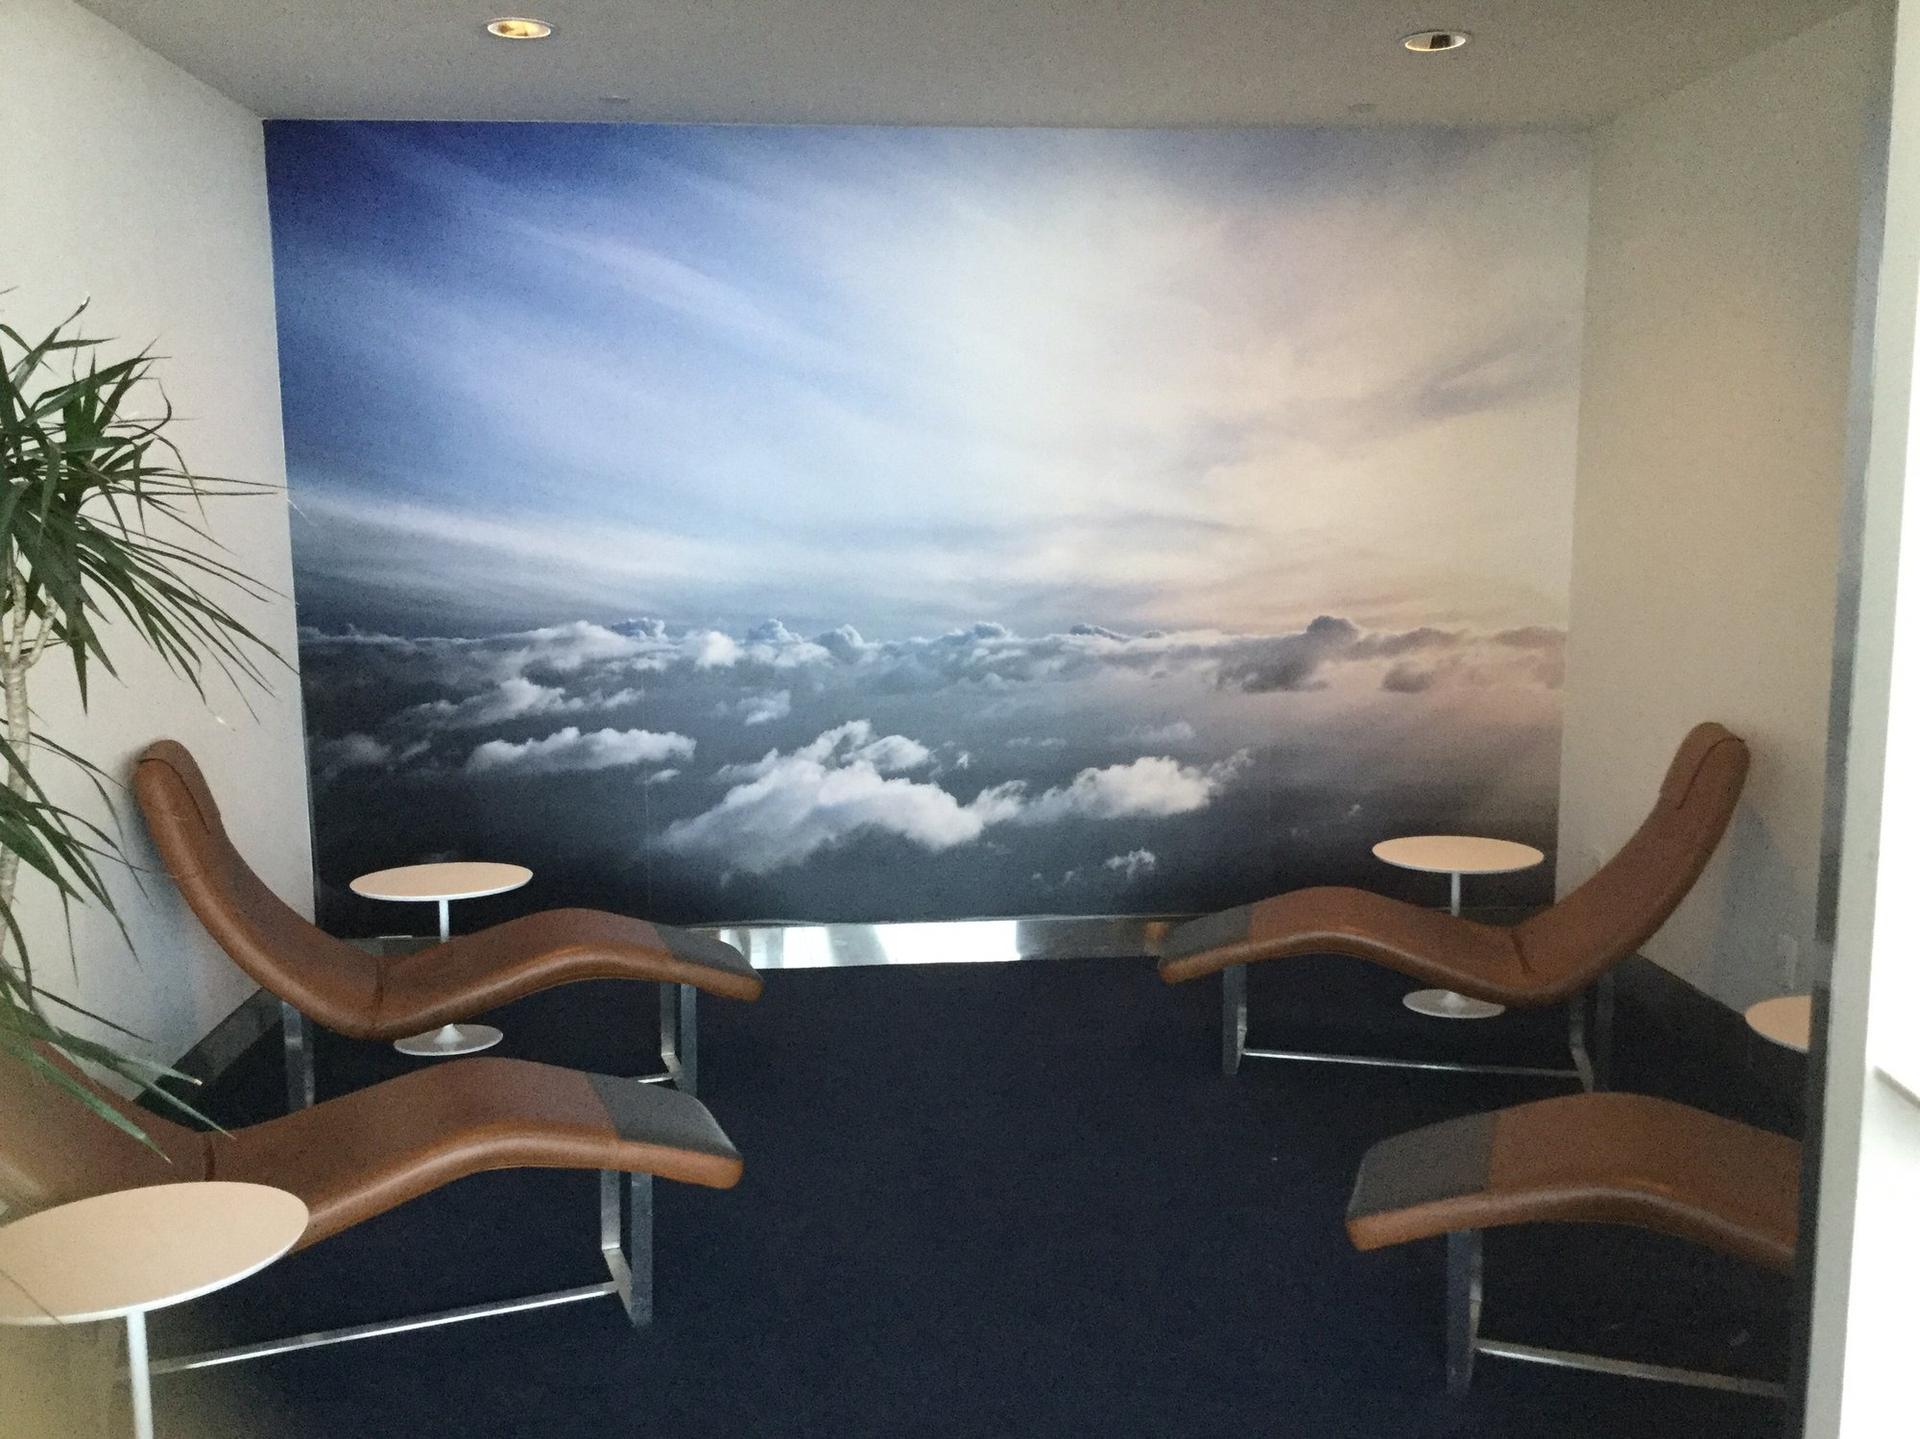 Lufthansa Business Lounge image 25 of 39